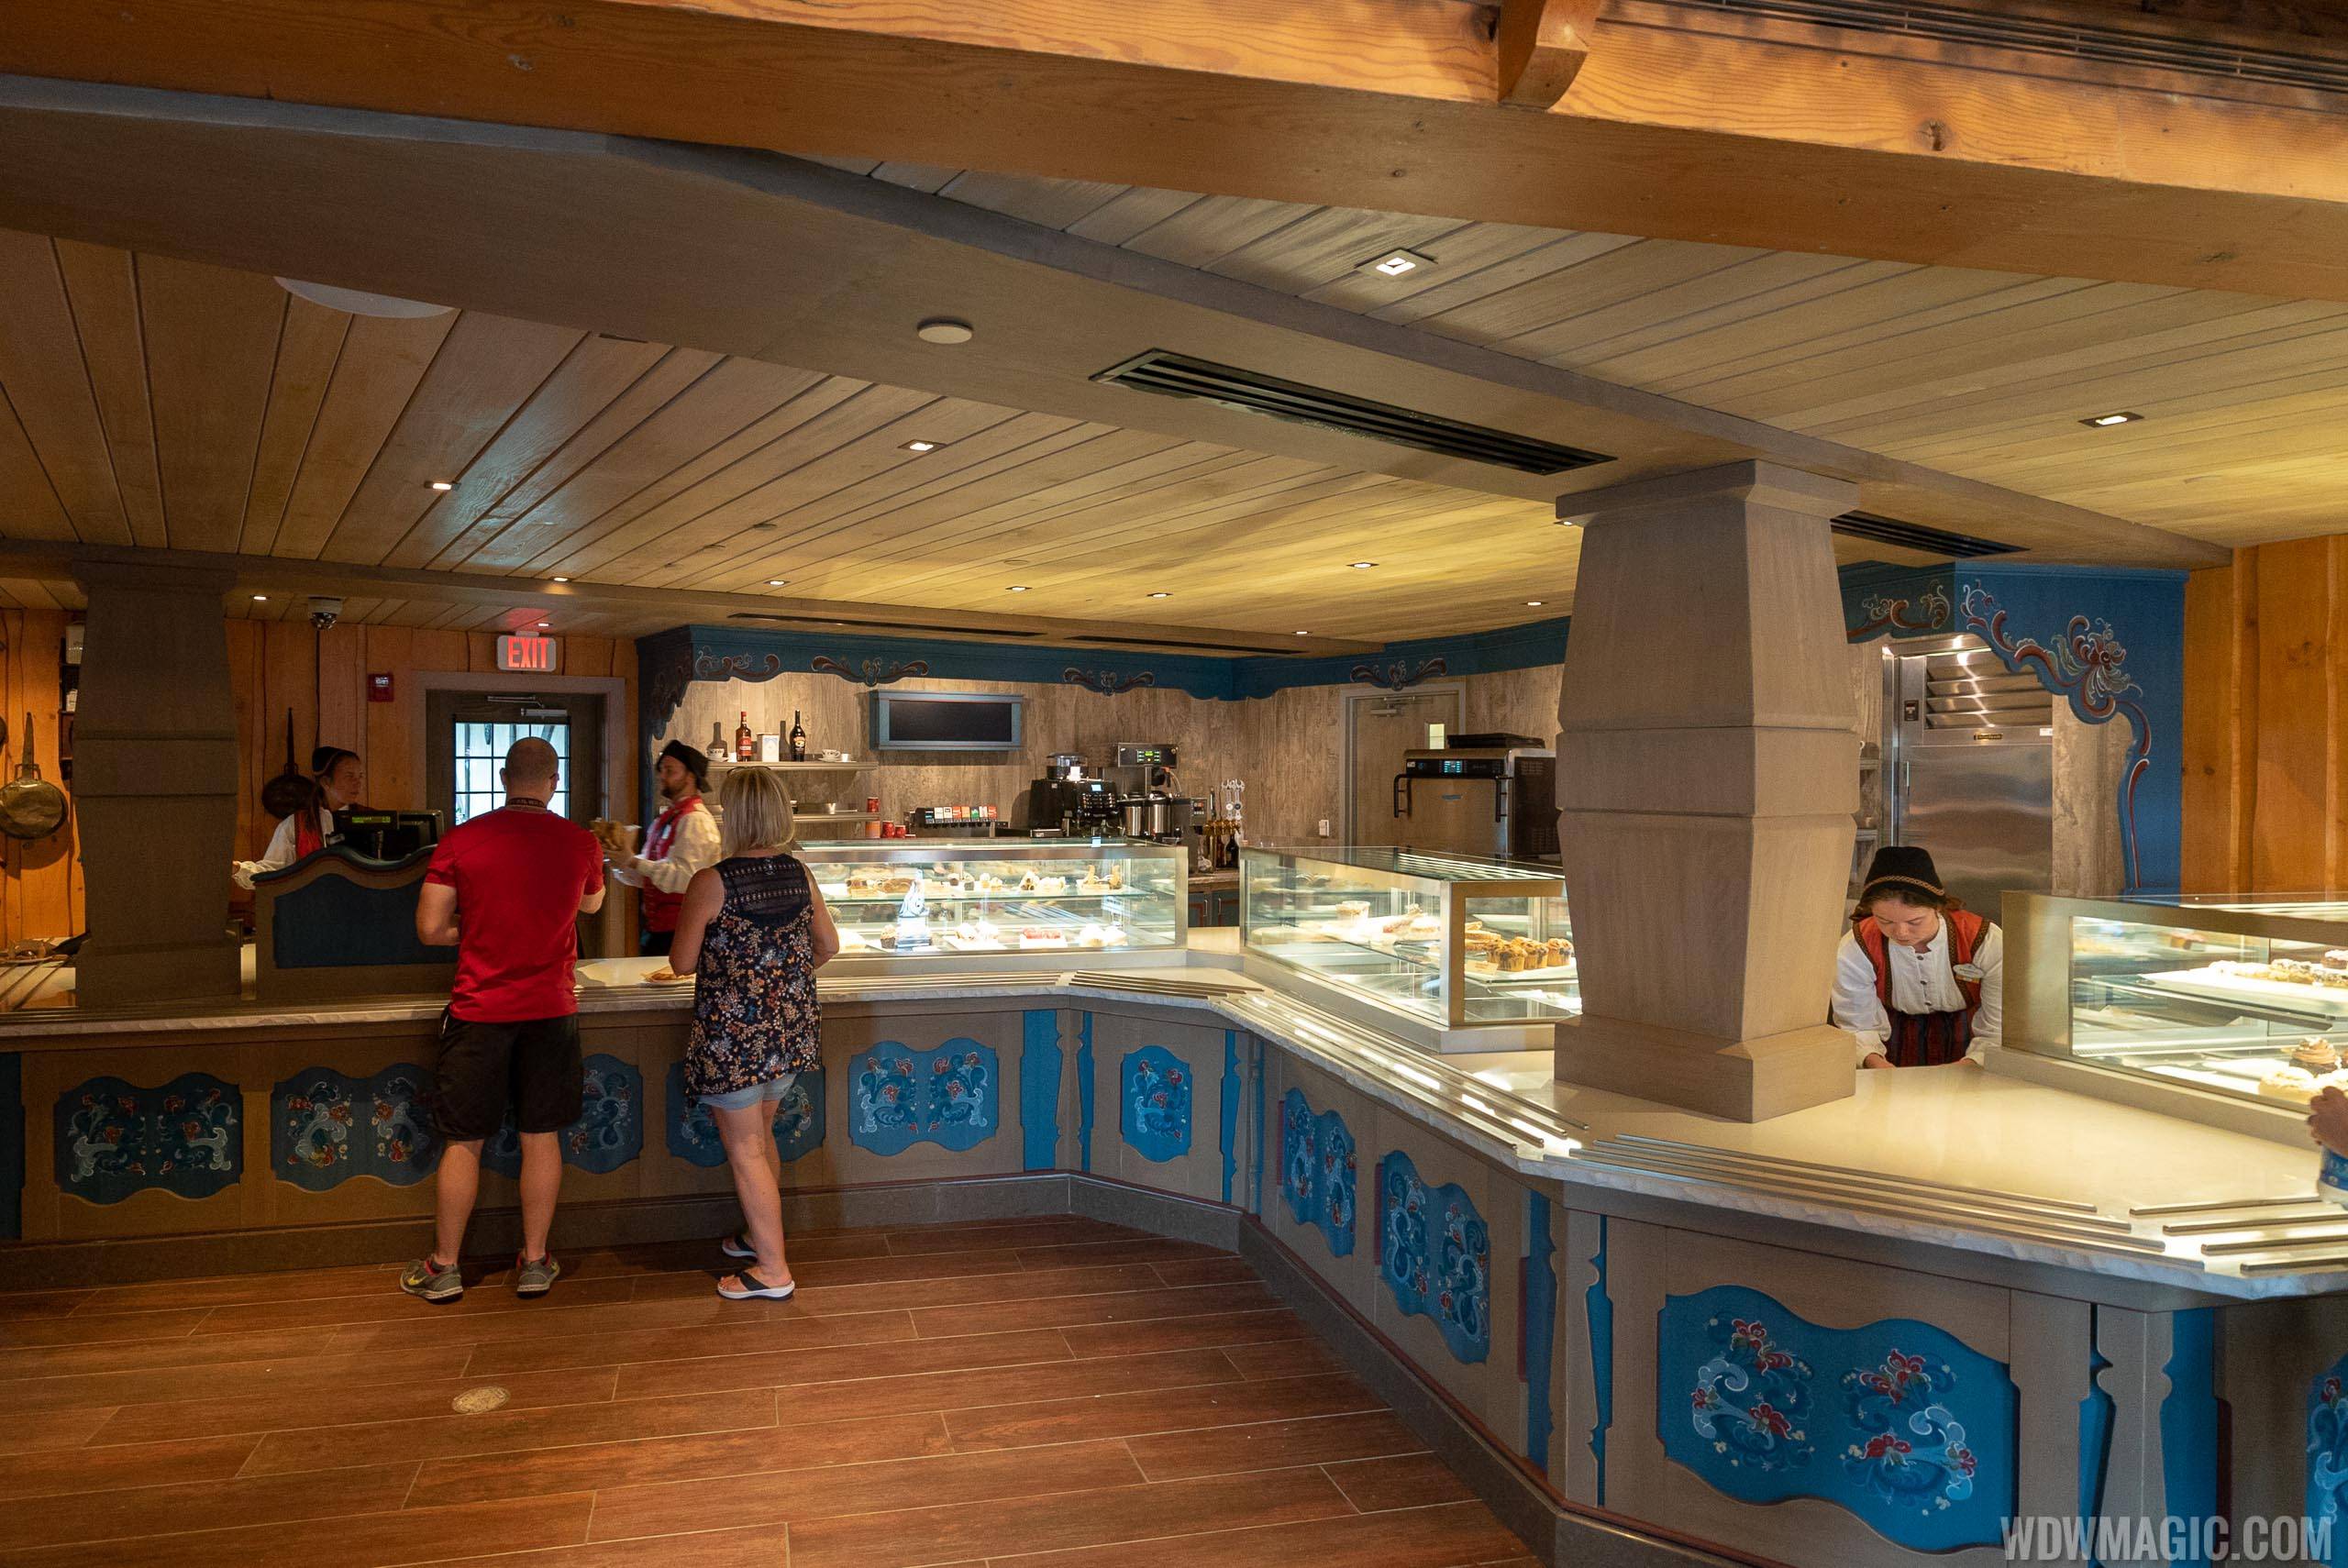 PHOTOS - Kringla Bakeri og Kafe reopens in Epcot's World Showcase